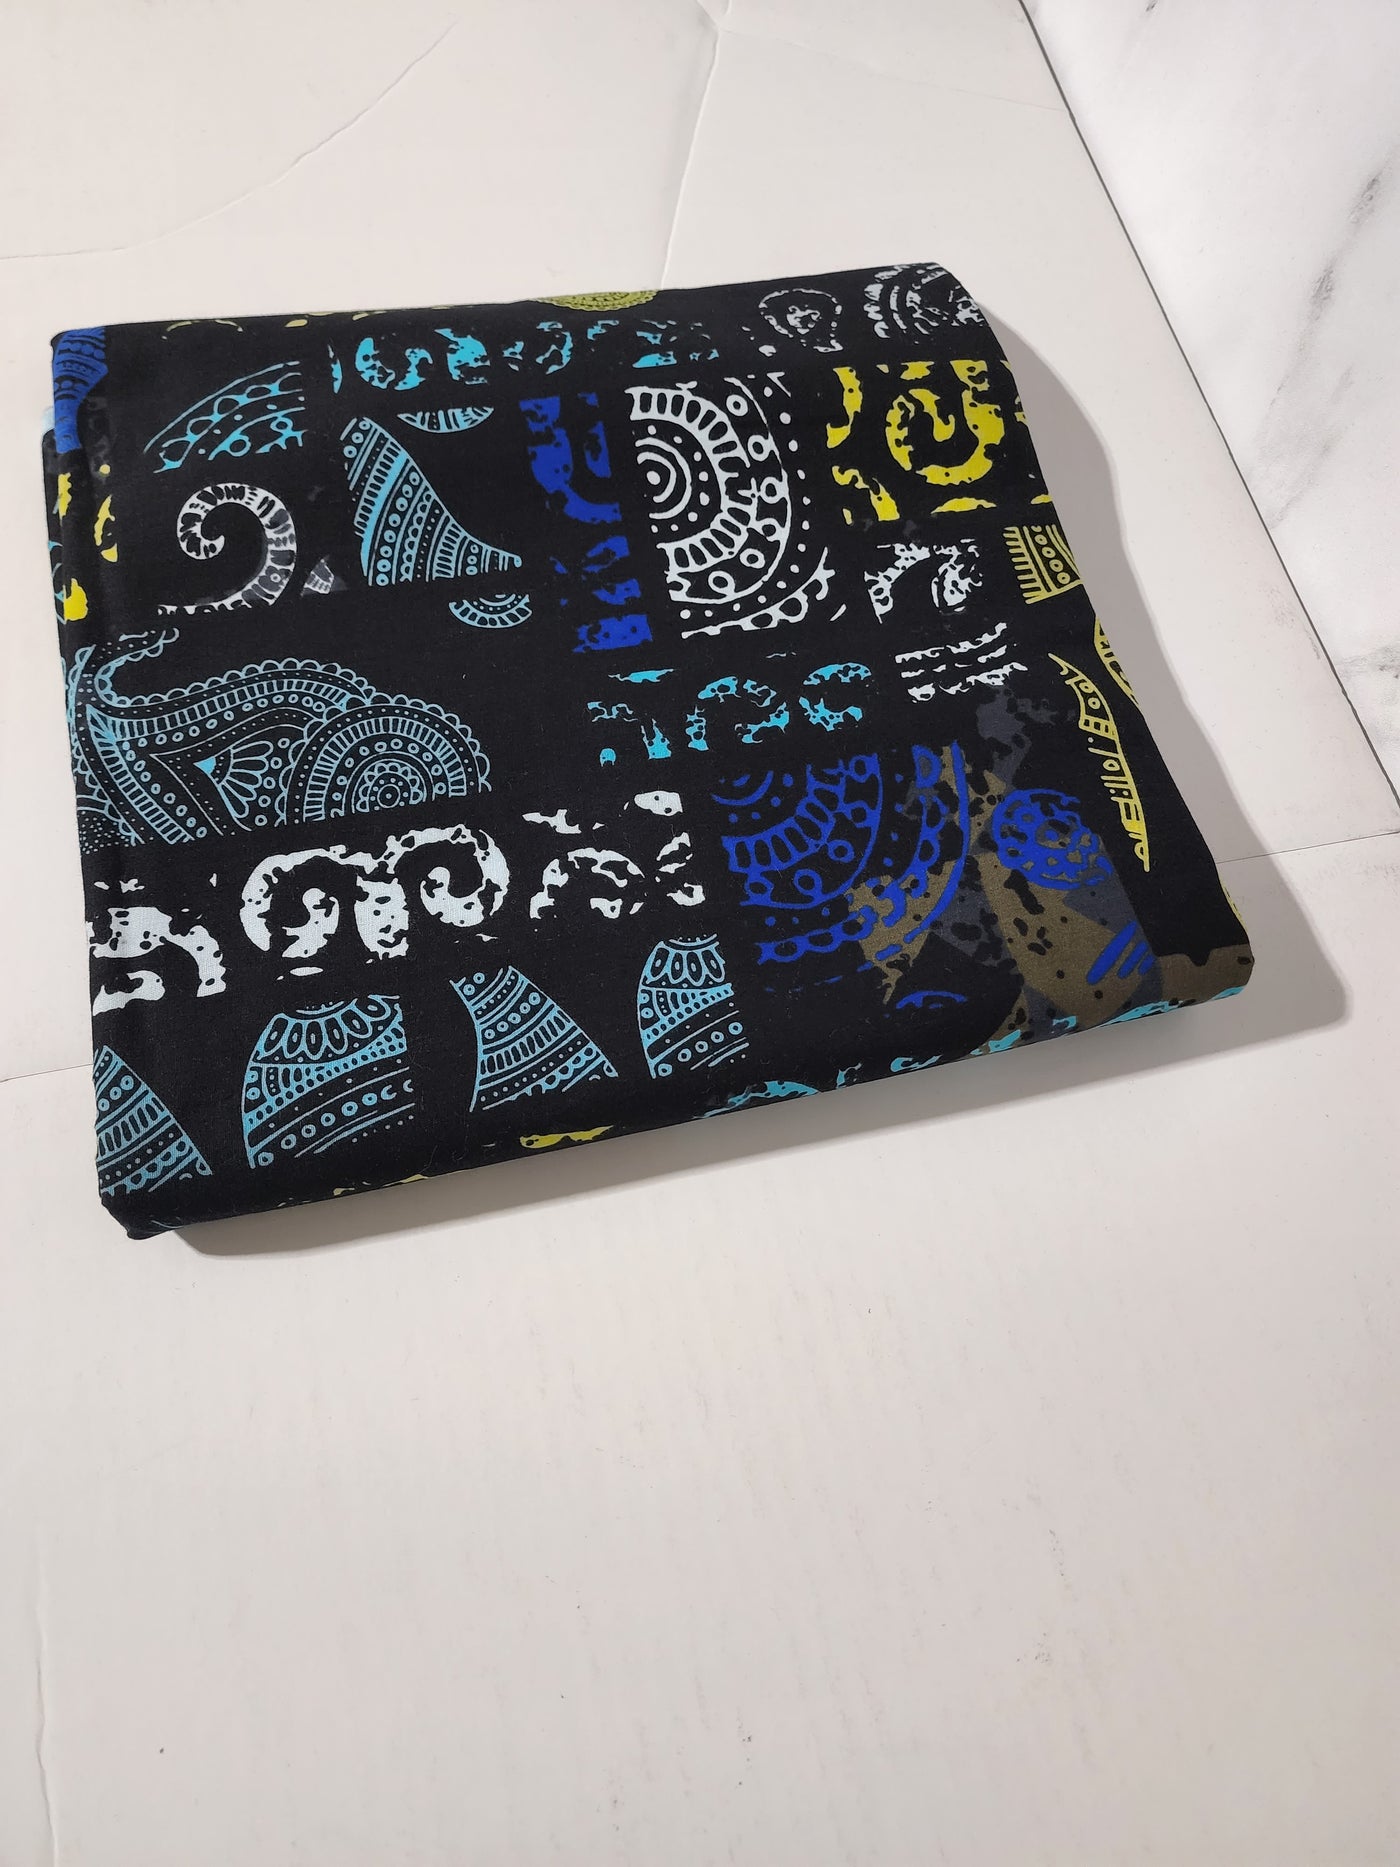 Blue and Black Ankara Fabric, ACS0244